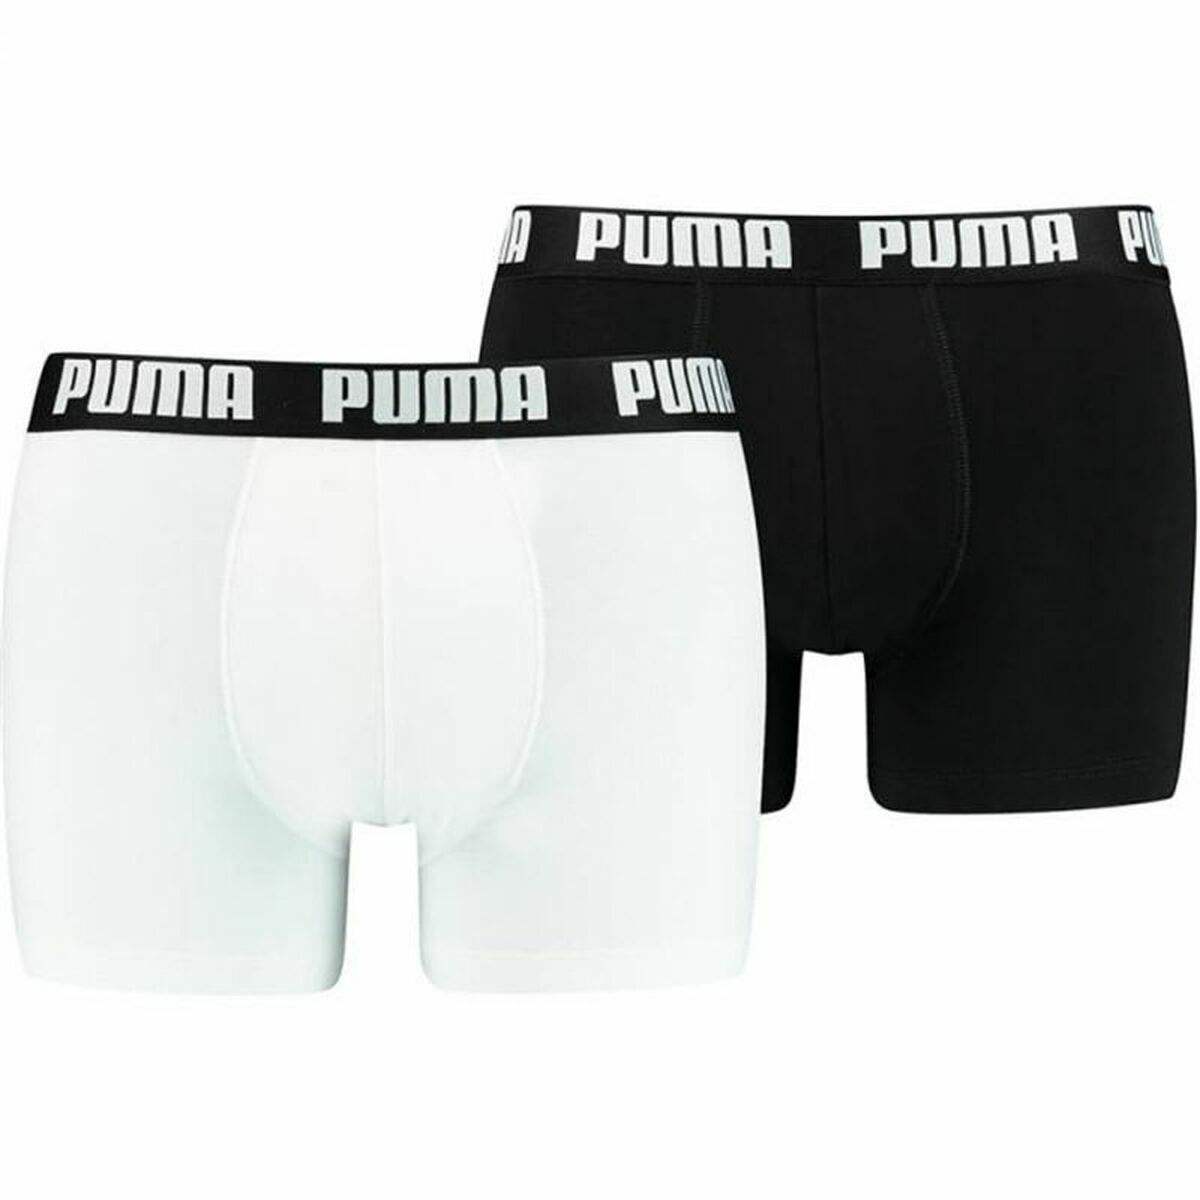 Boxer pour homme Puma Basic Noir Blanc - Puma - Jardin D'Eyden - jardindeyden.fr